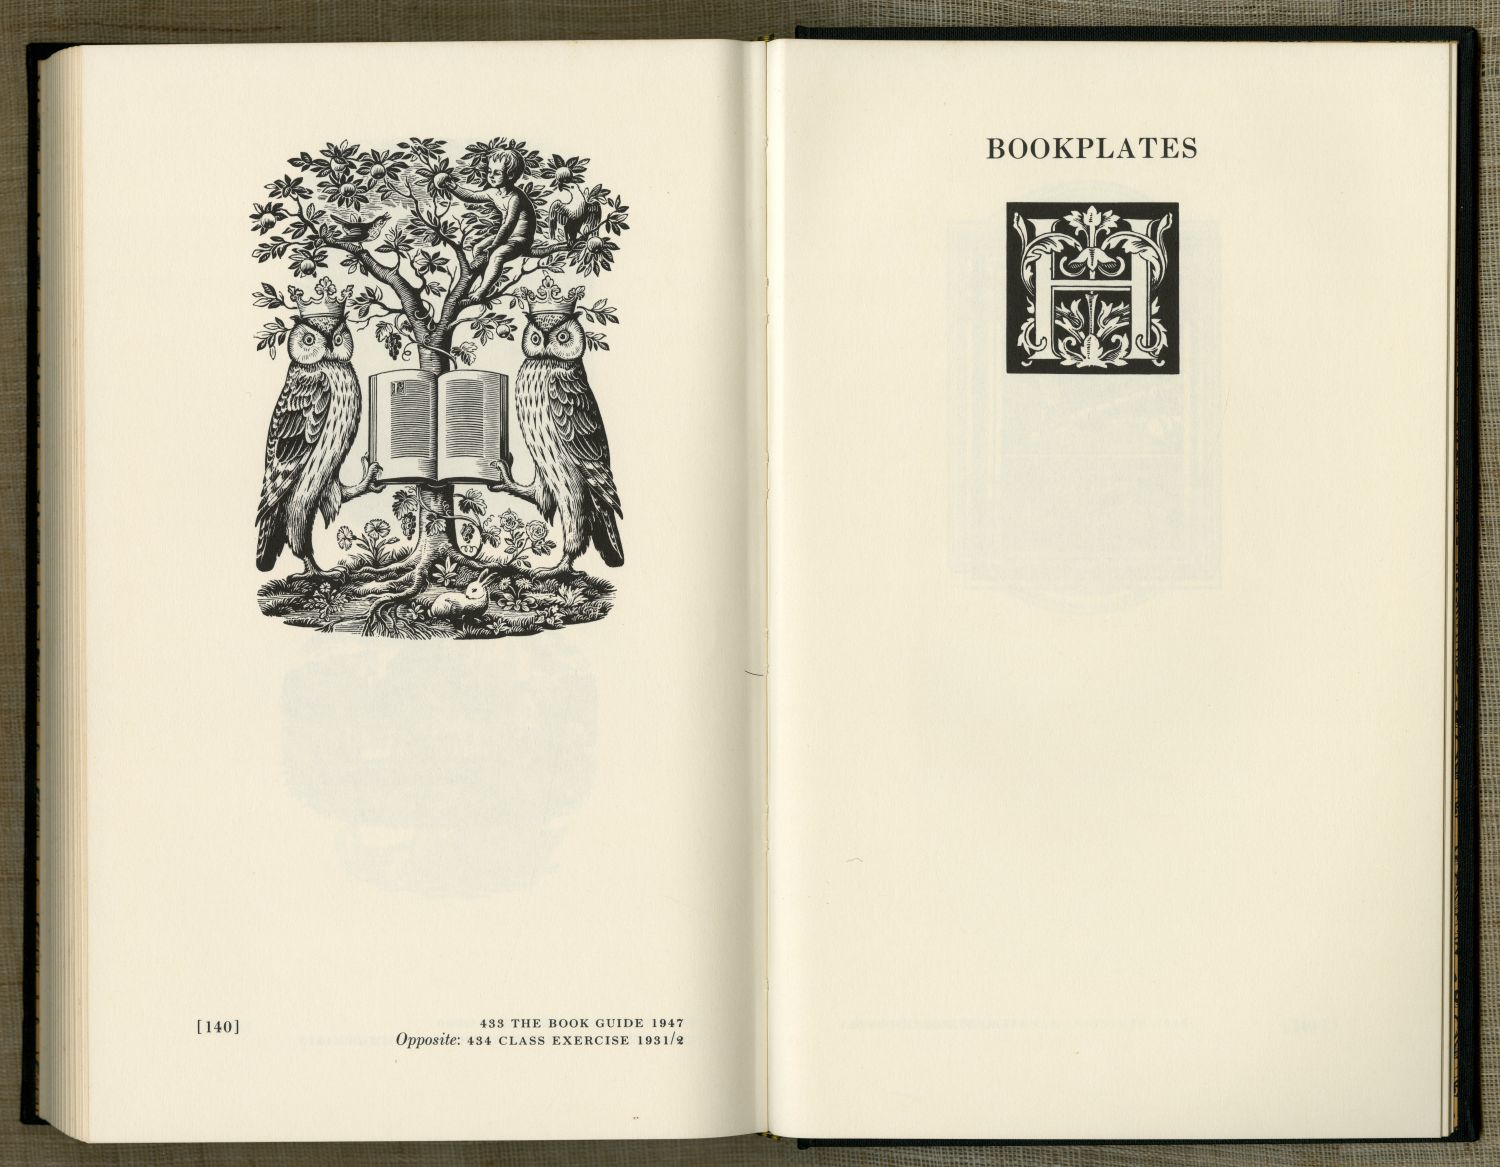 『Joan Hassall: engravings and drawings』（1985年）のページから12